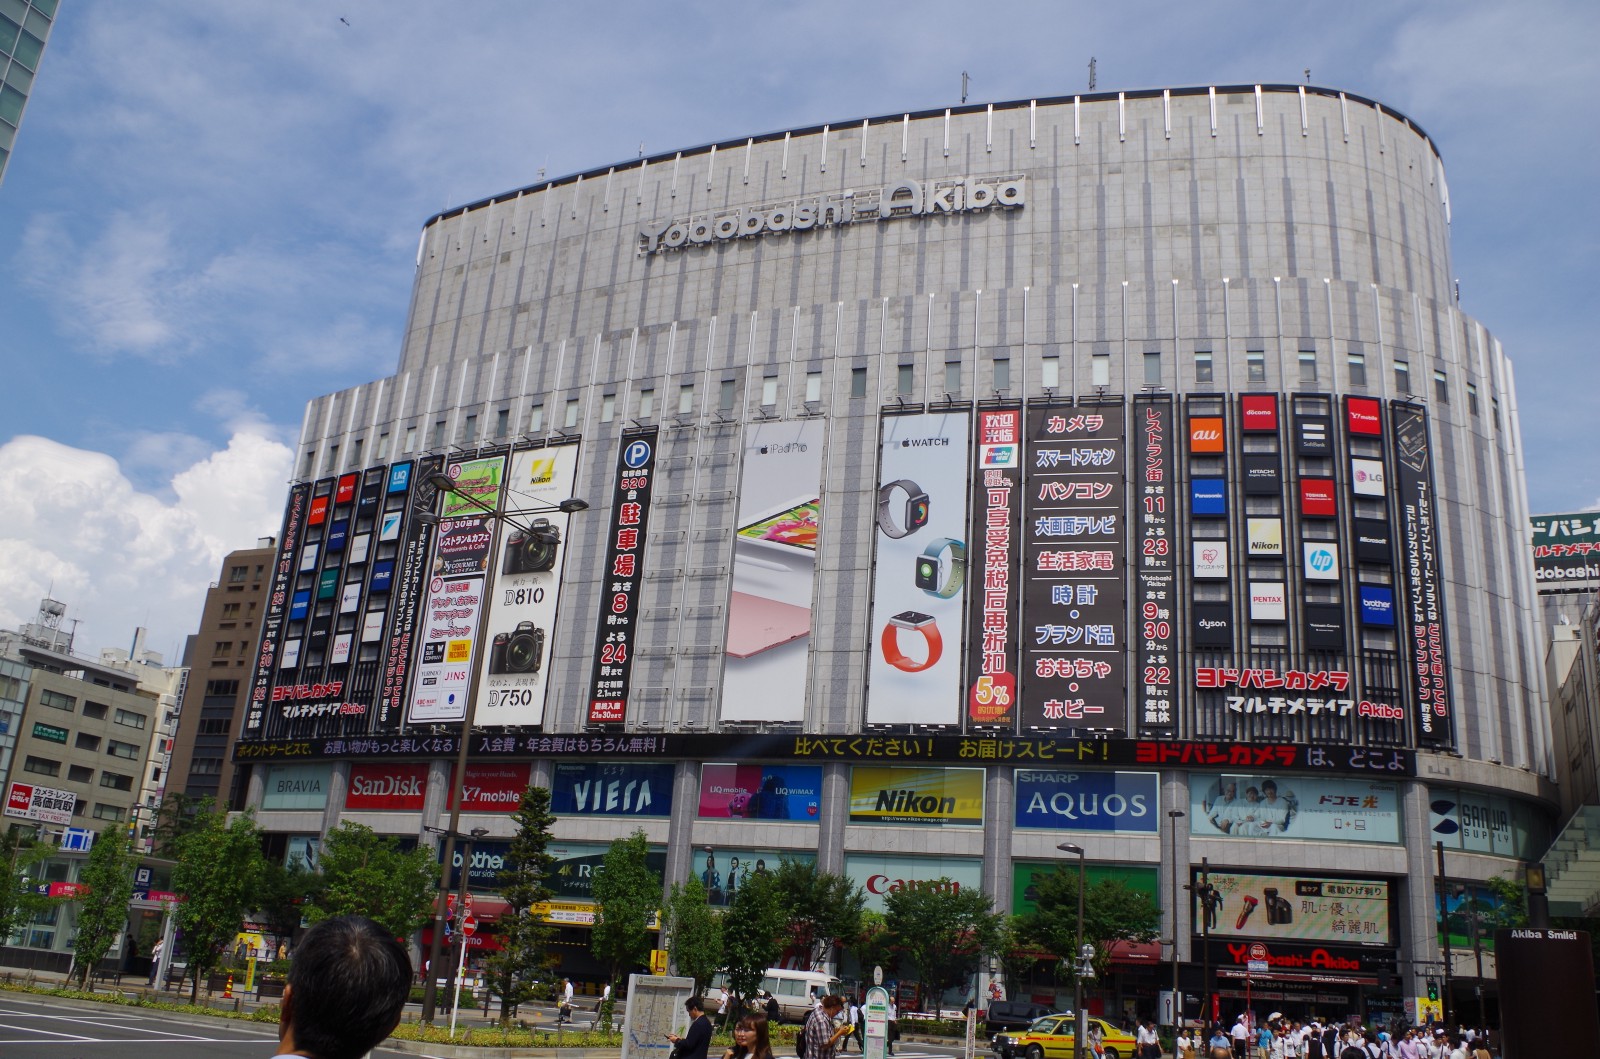 In front of Yodobashi Camera Akihabara